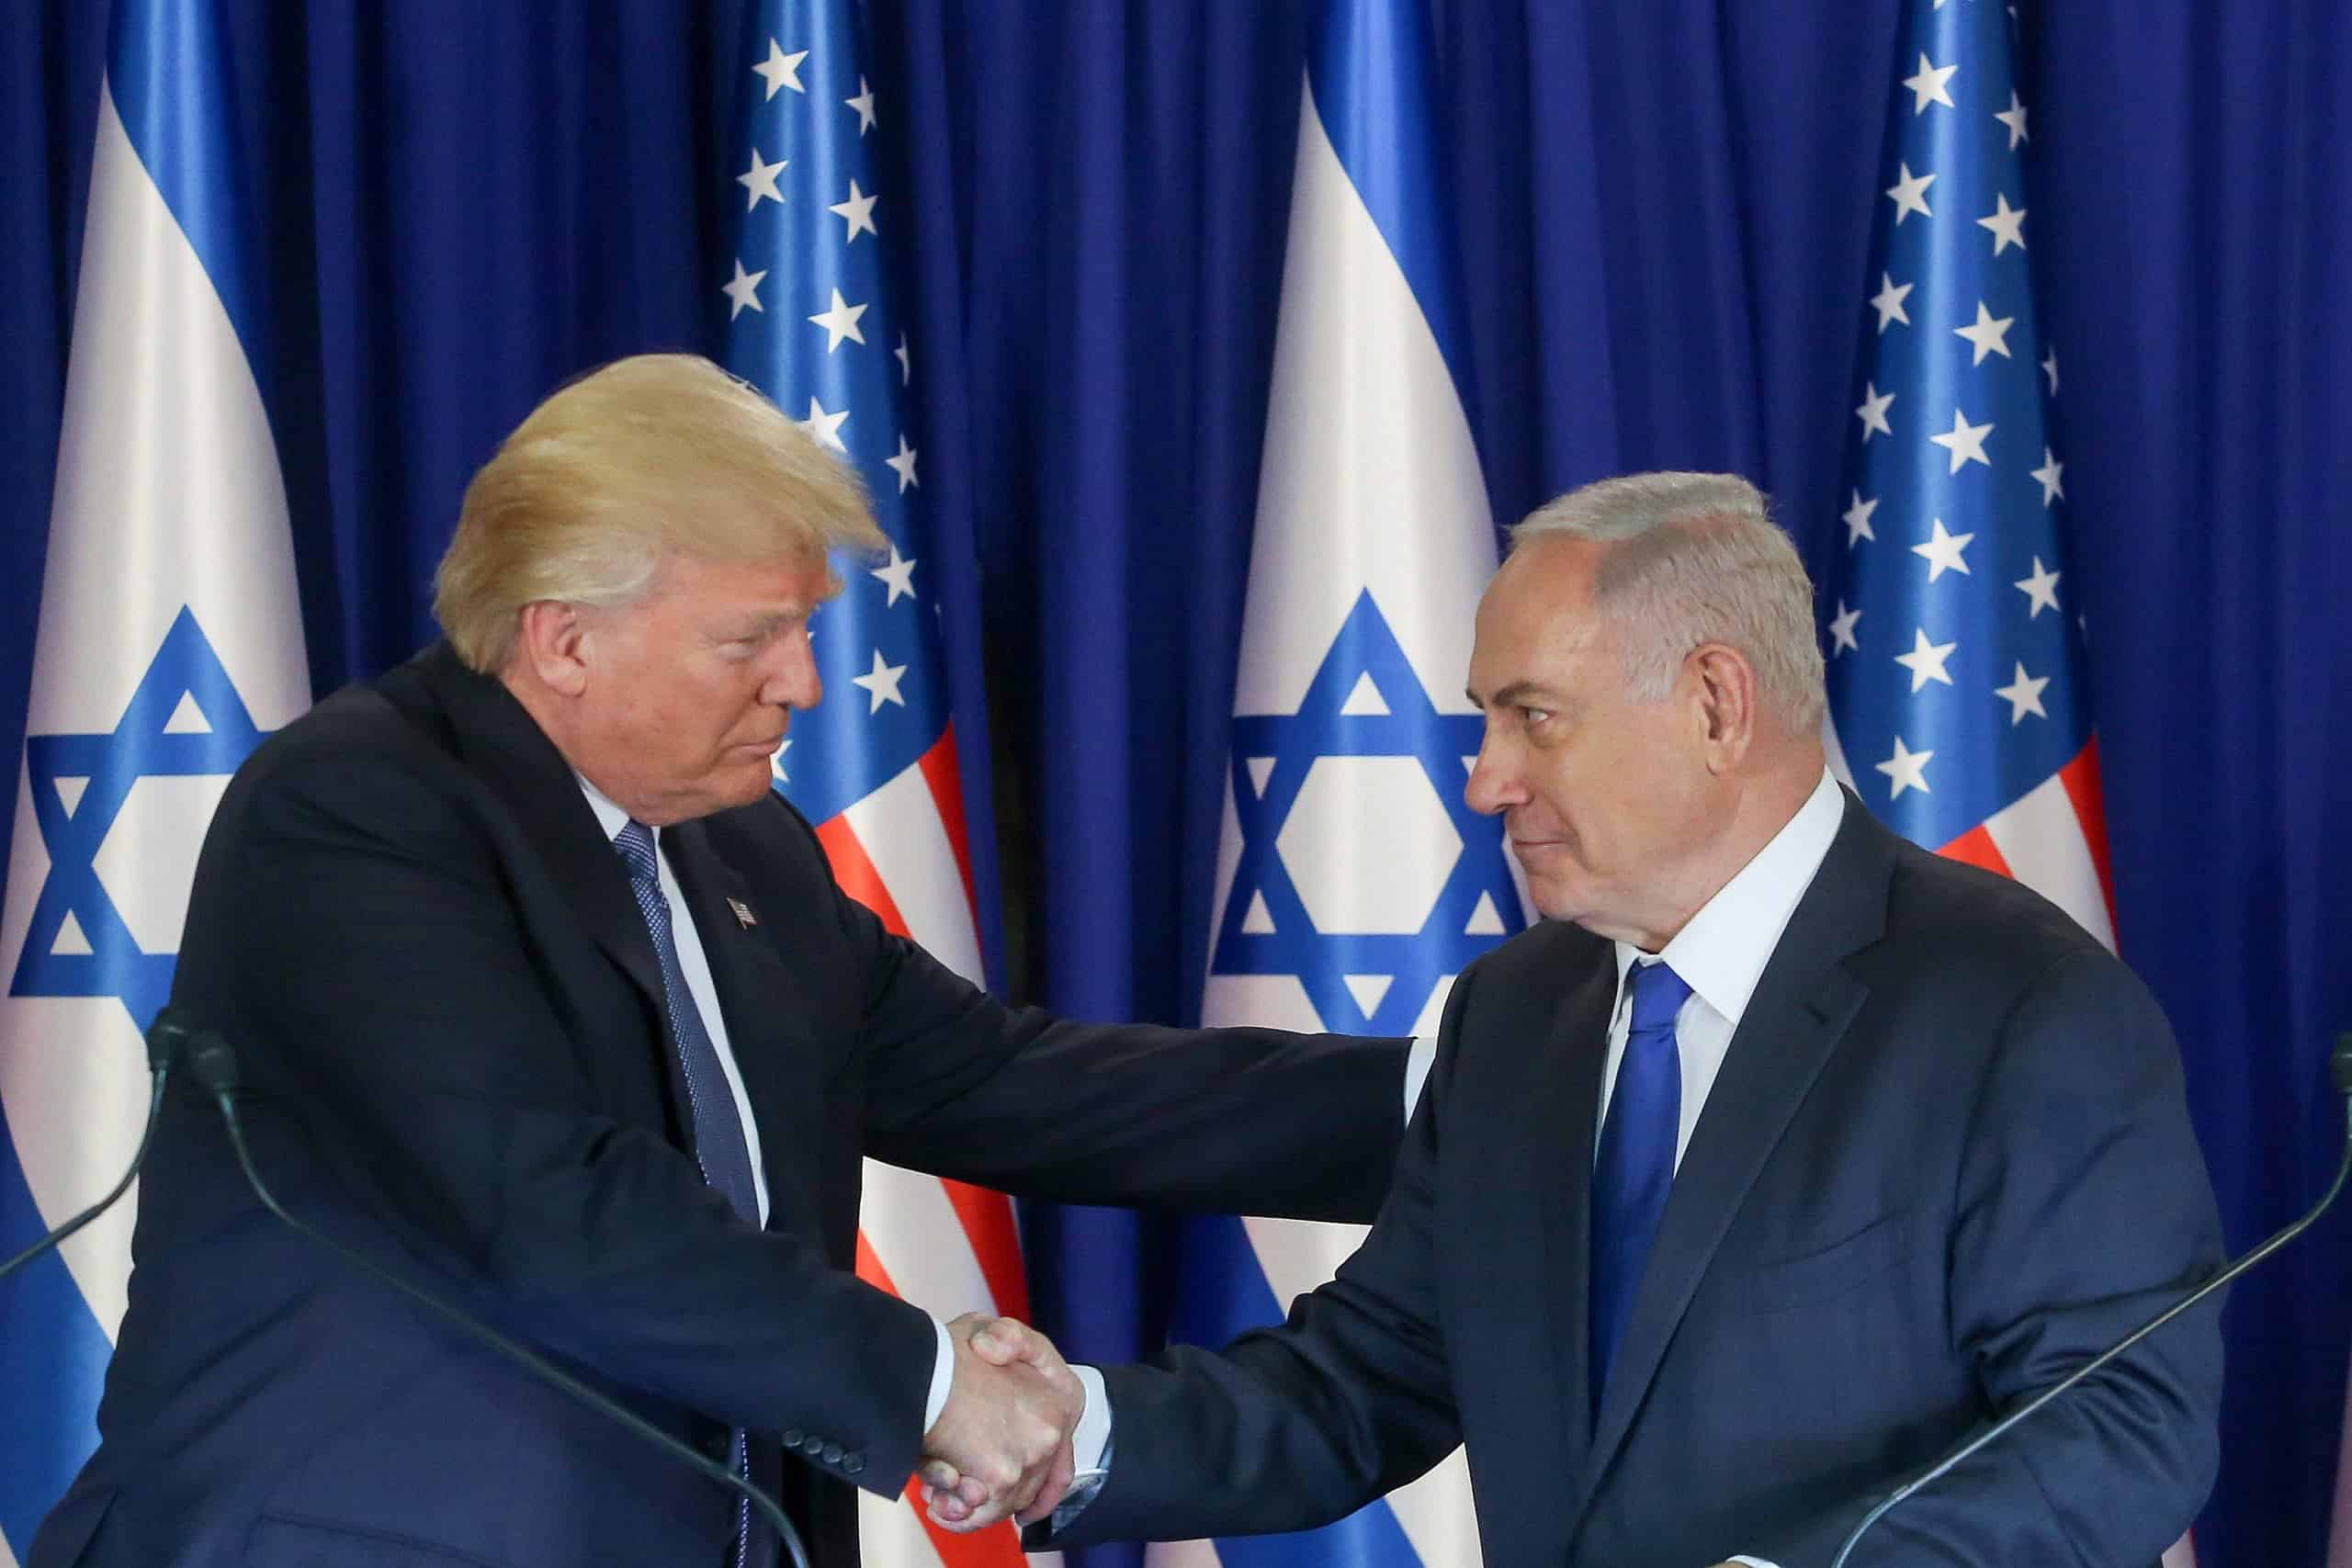 Trump to host Netanyahu at Mar-a-Lago on Friday